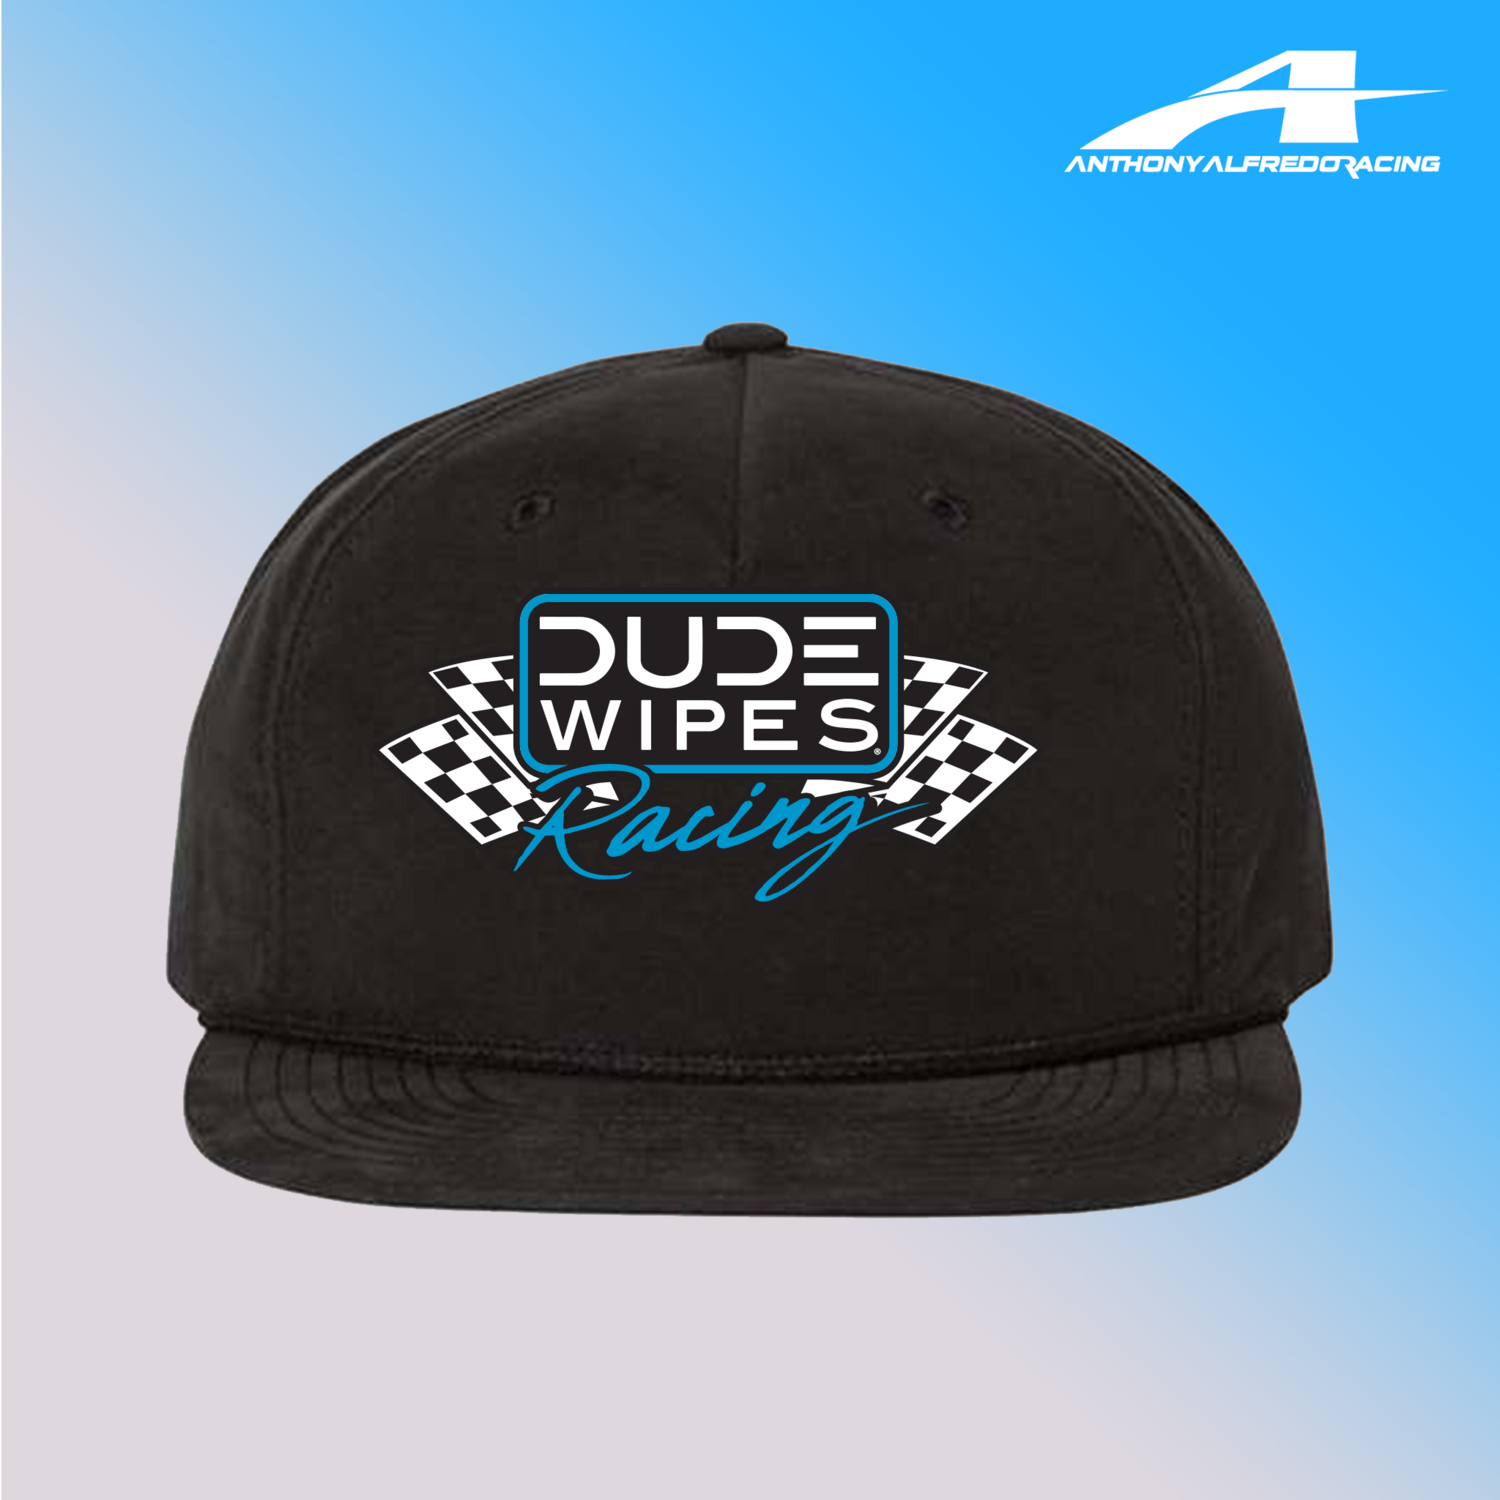 Anthony Alfredo Dude Wipes Racing Hat